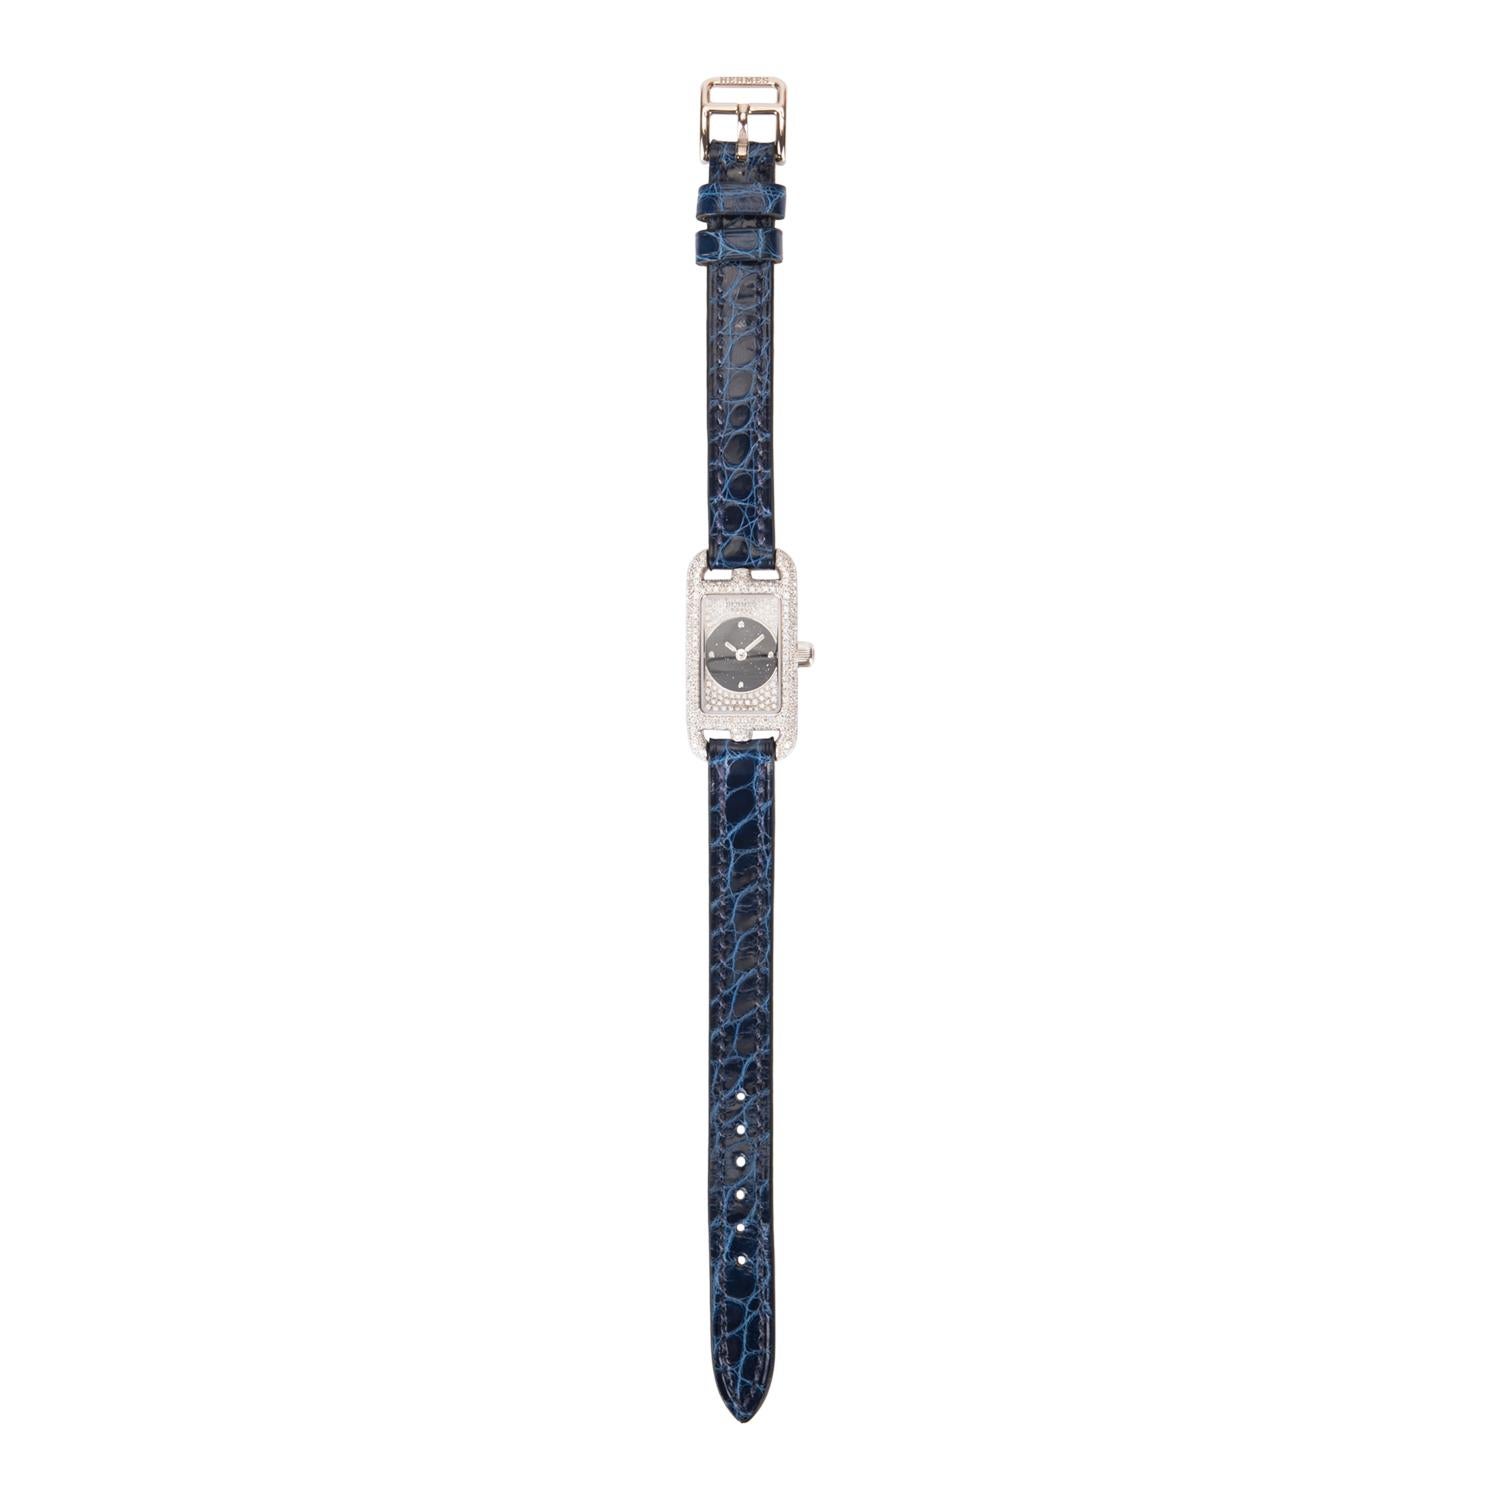 Contemporary Hermes Diamond Watch Nantucket Aventurine 18Kt White Gold Limited Edition